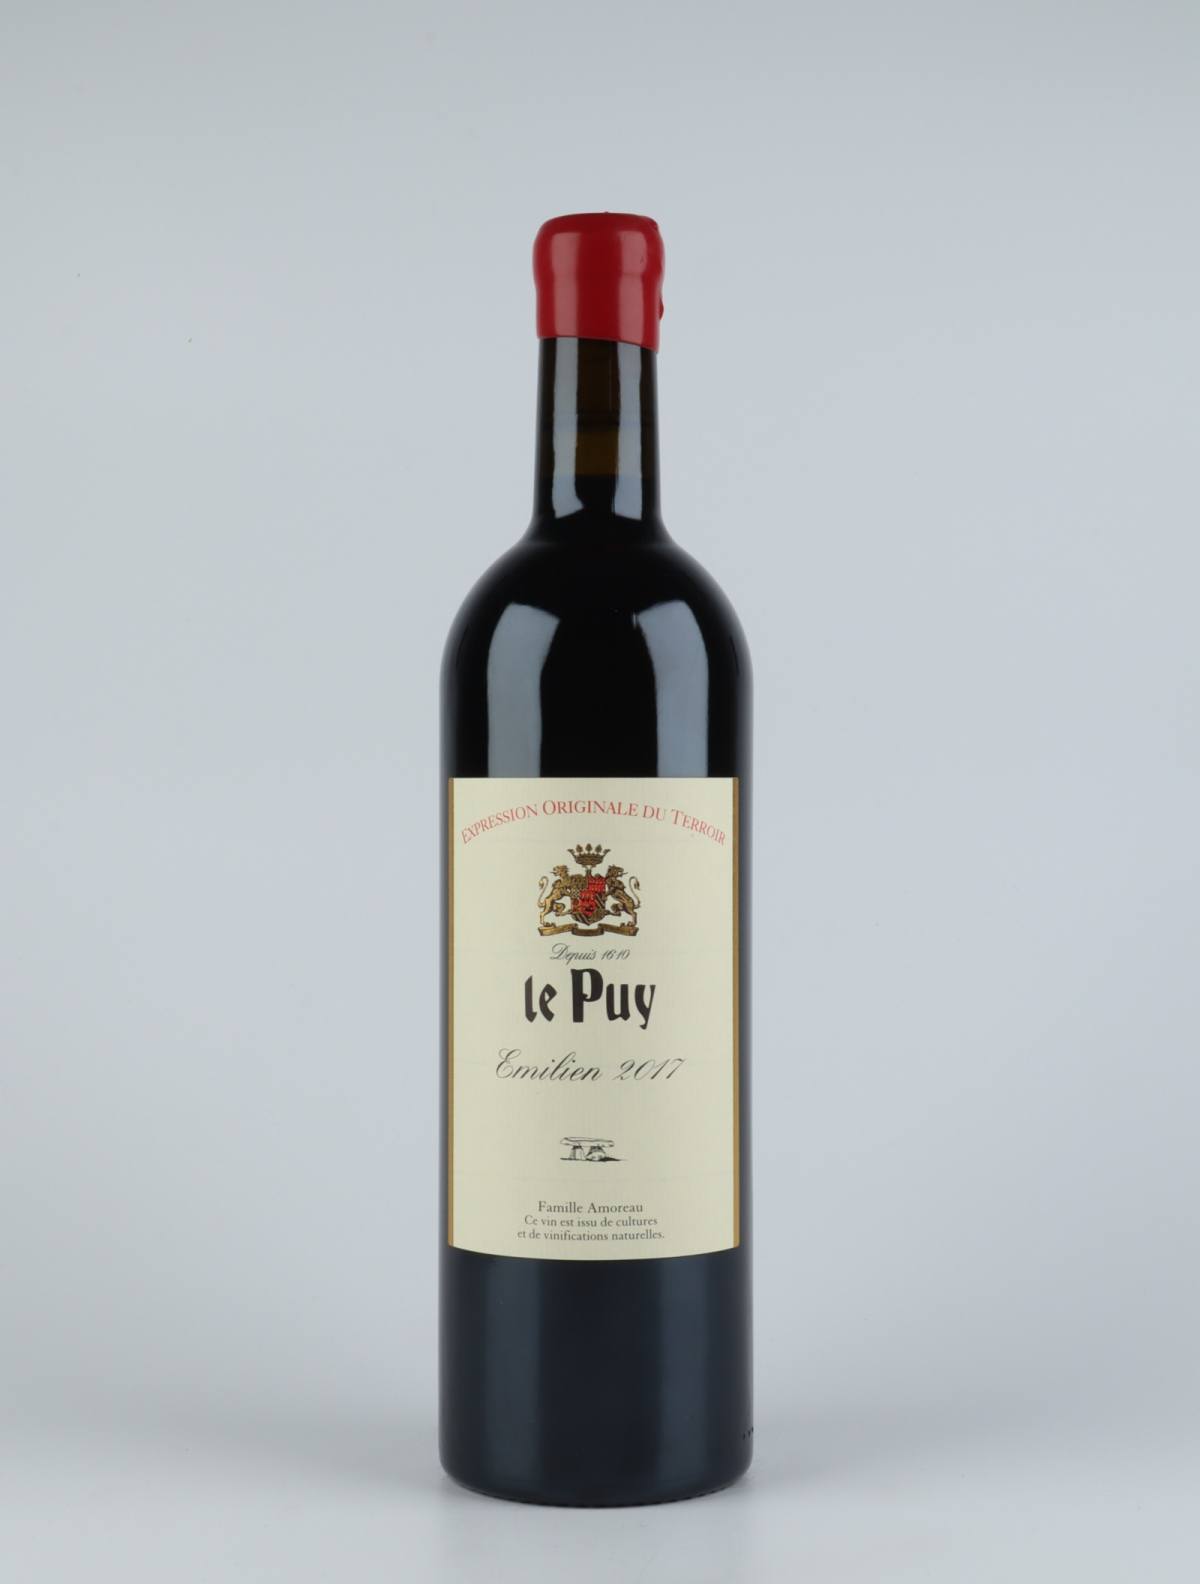 A bottle 2017 Emilien Red wine from Château le Puy, Bordeaux in France